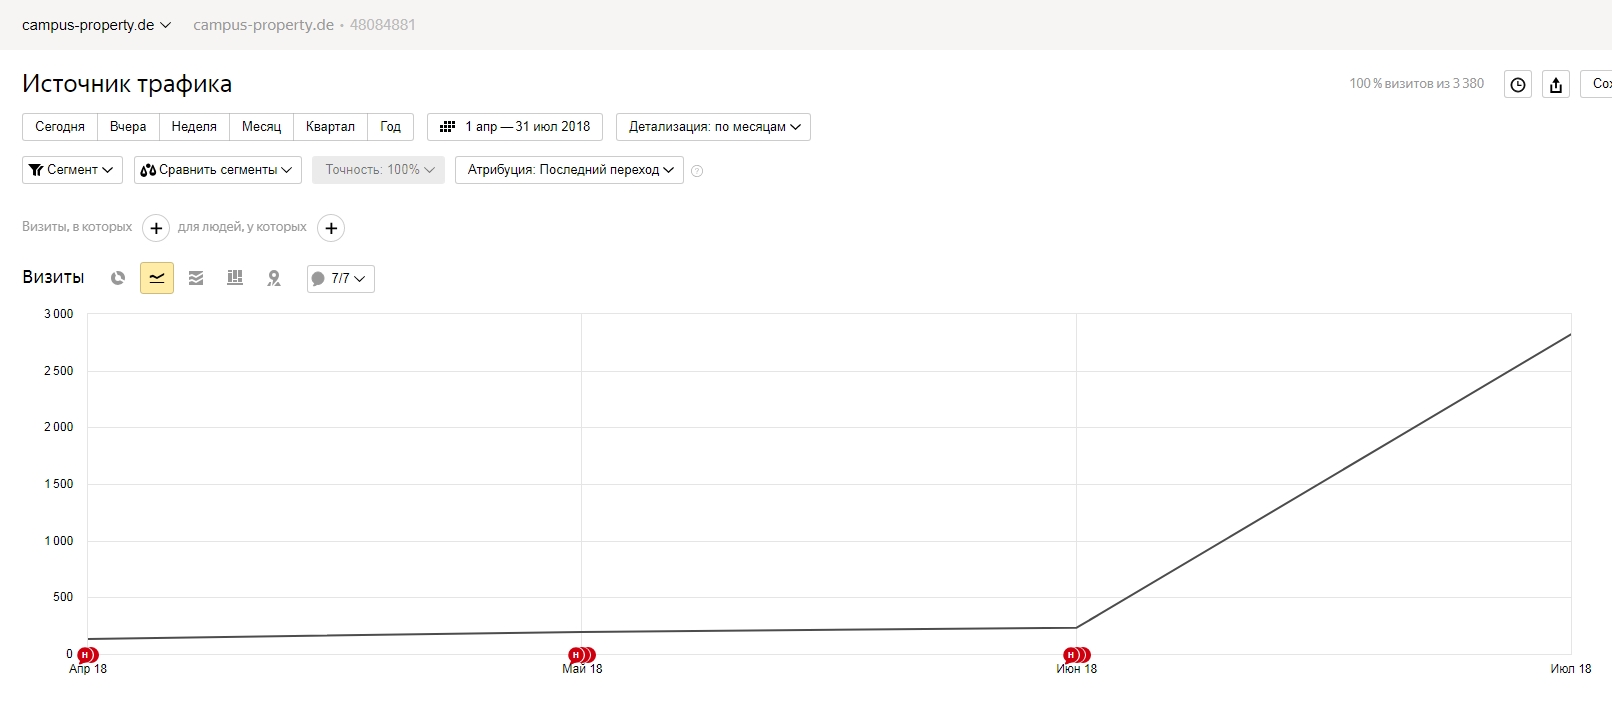  Traffic growth rates according to Yandex.Metrica